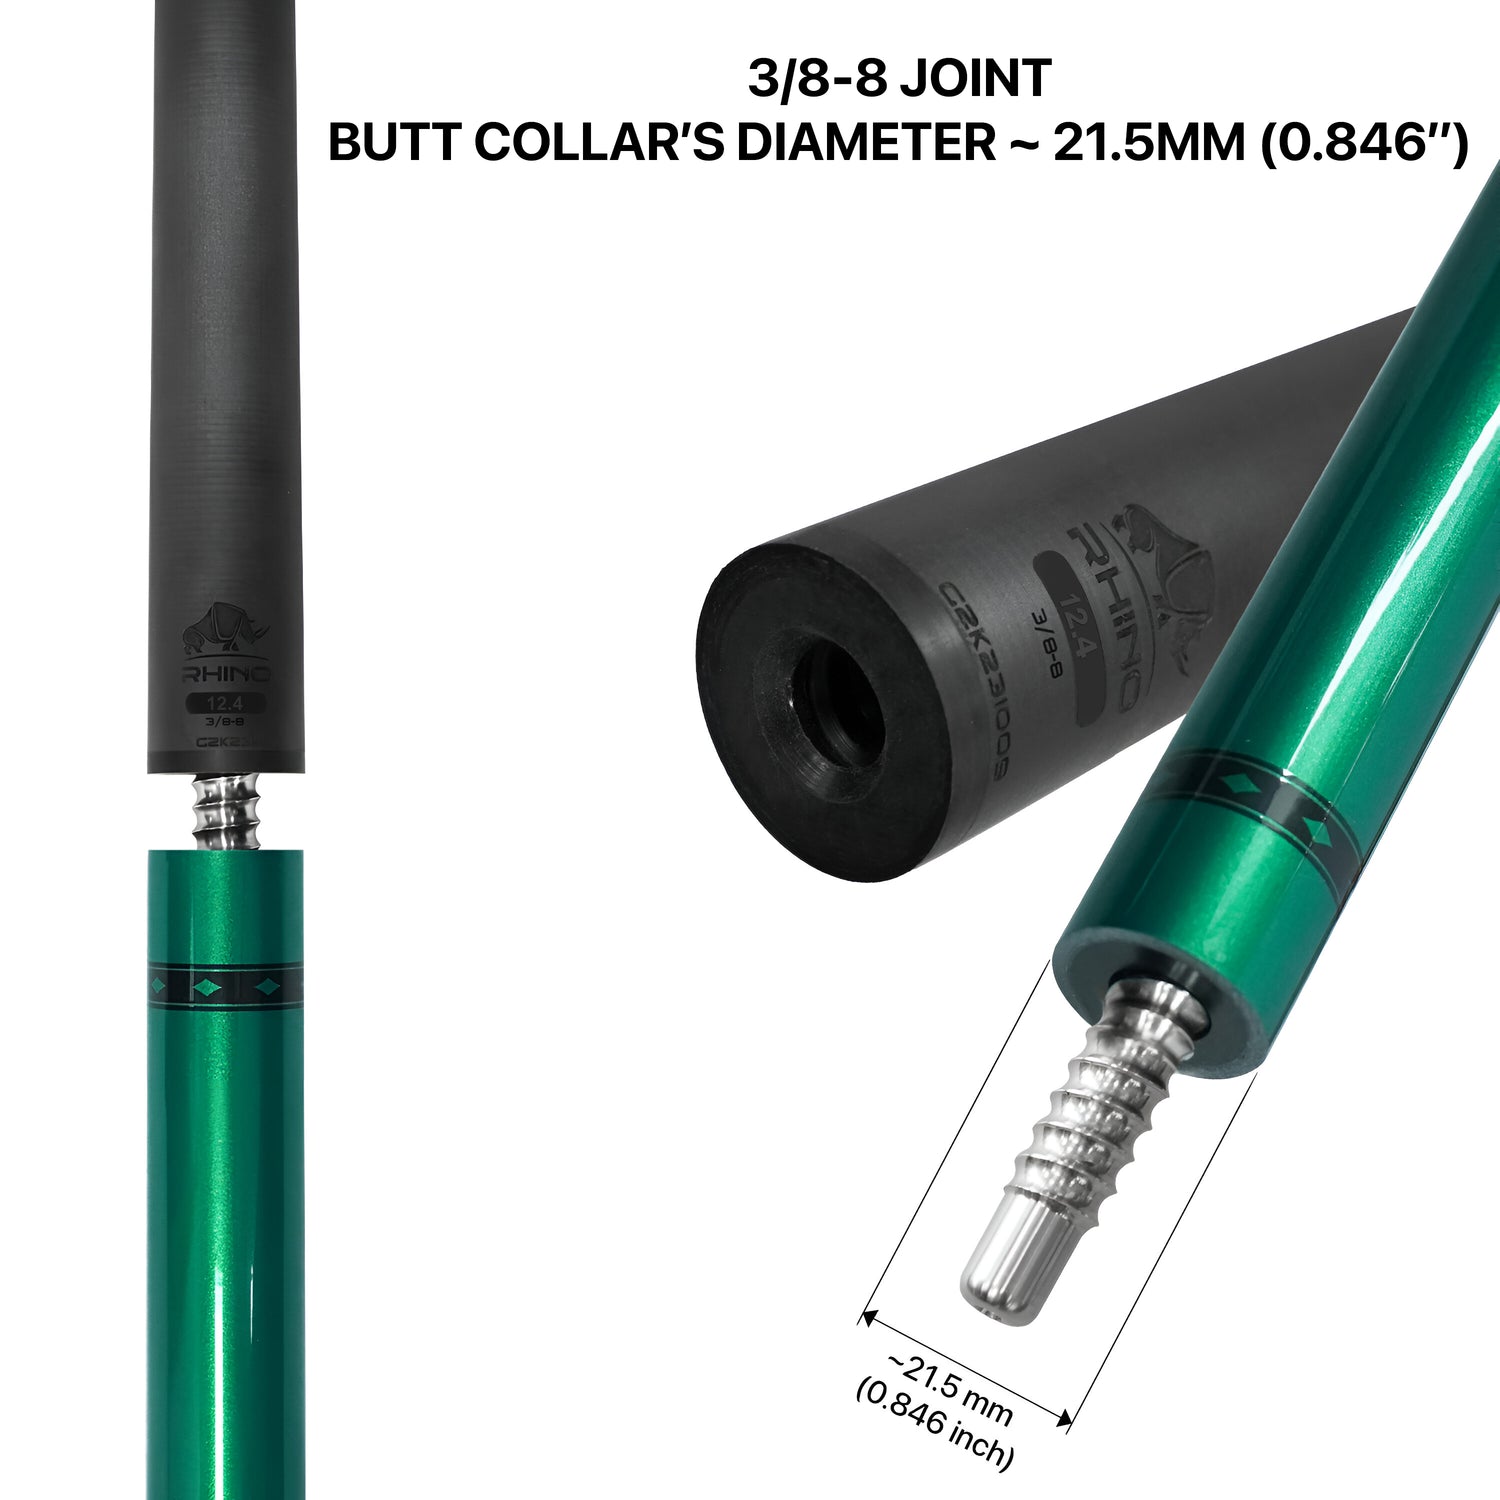 Nebula Pool Cue - Green (3/8-8 Joint) - 12.4 mm Tip Diameter